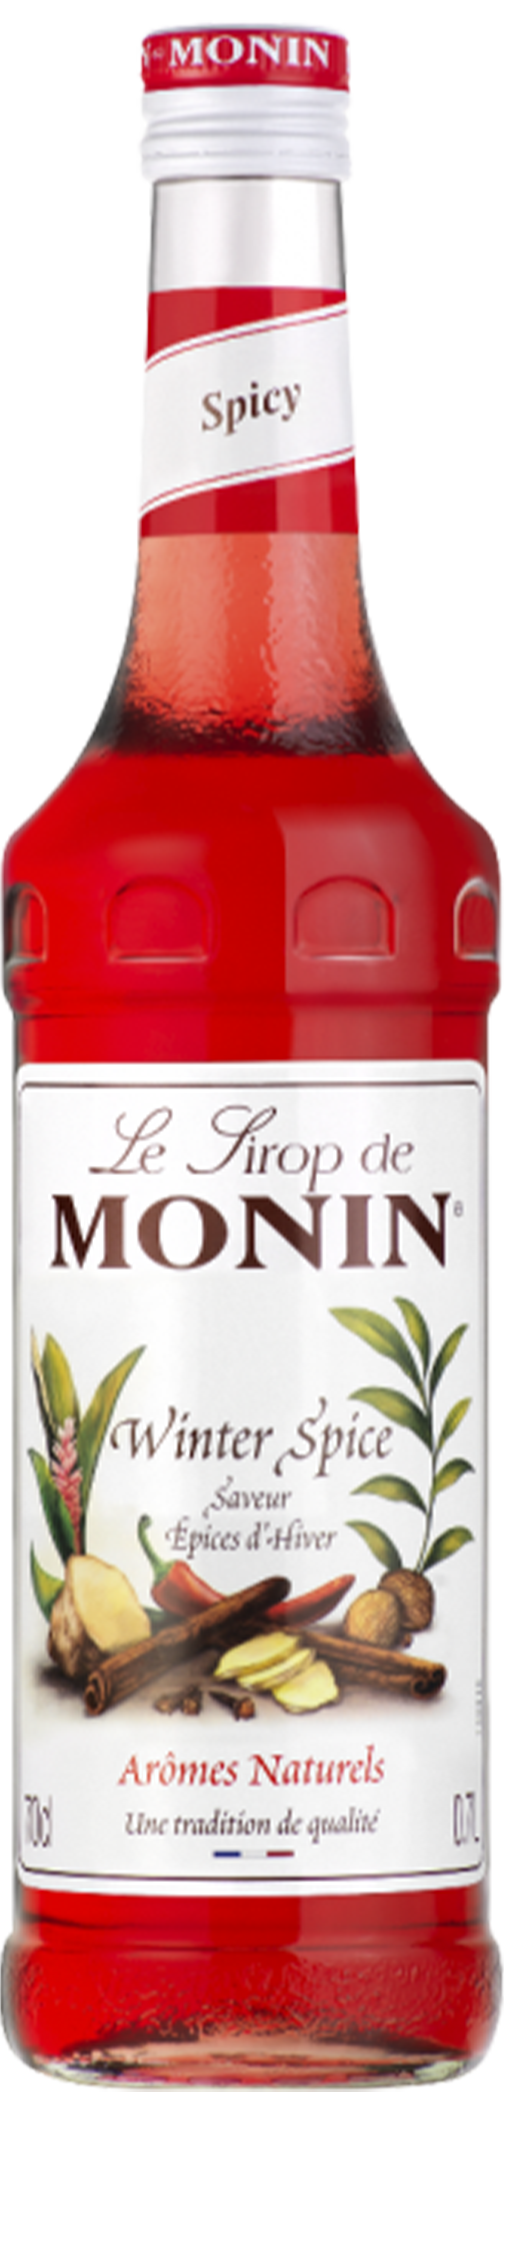 Le Sirop de MONIN Winter spice 0.7L